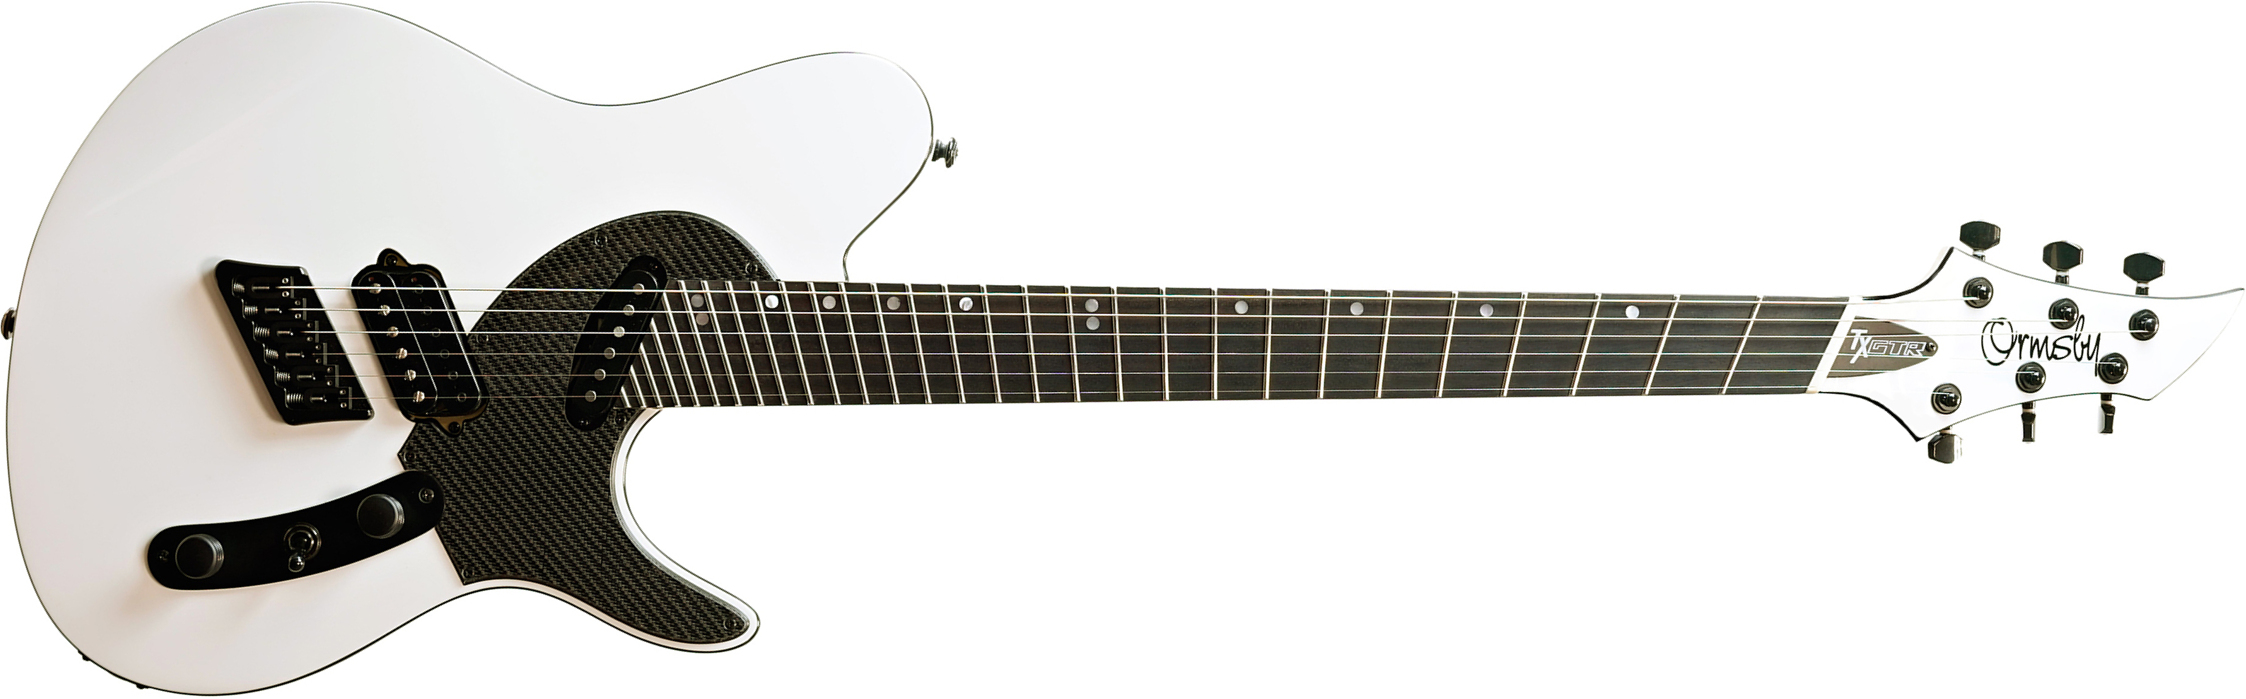 Ormsby Tx Gtr Carbon 6c Multiscale Hs Ht Eb - Ermine White - Tel shape electric guitar - Main picture